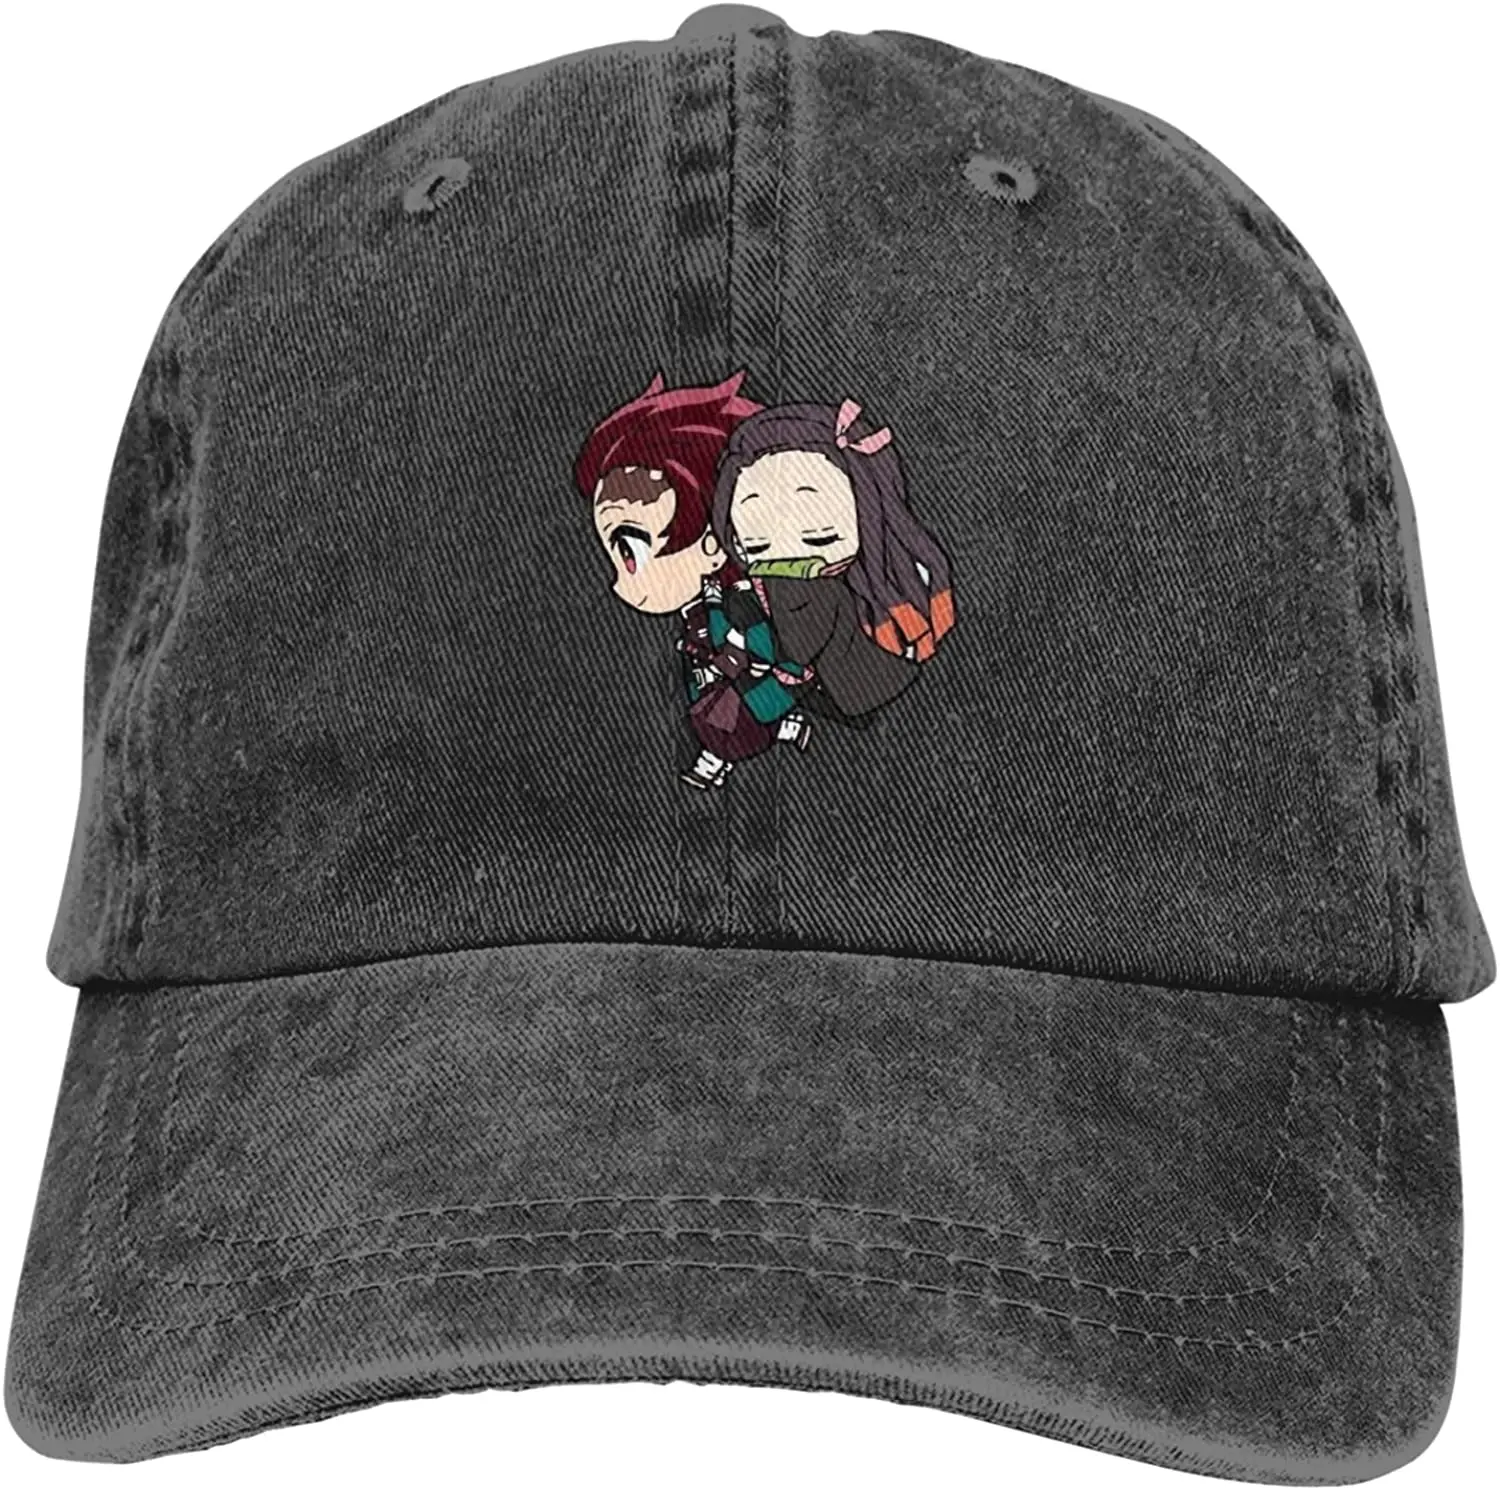 Japan Anime Hat for Adult Adjustable Baseball Cap Low Profile Washed Cotton Denim Caps for Men Women Dad Hats Snapback Cap